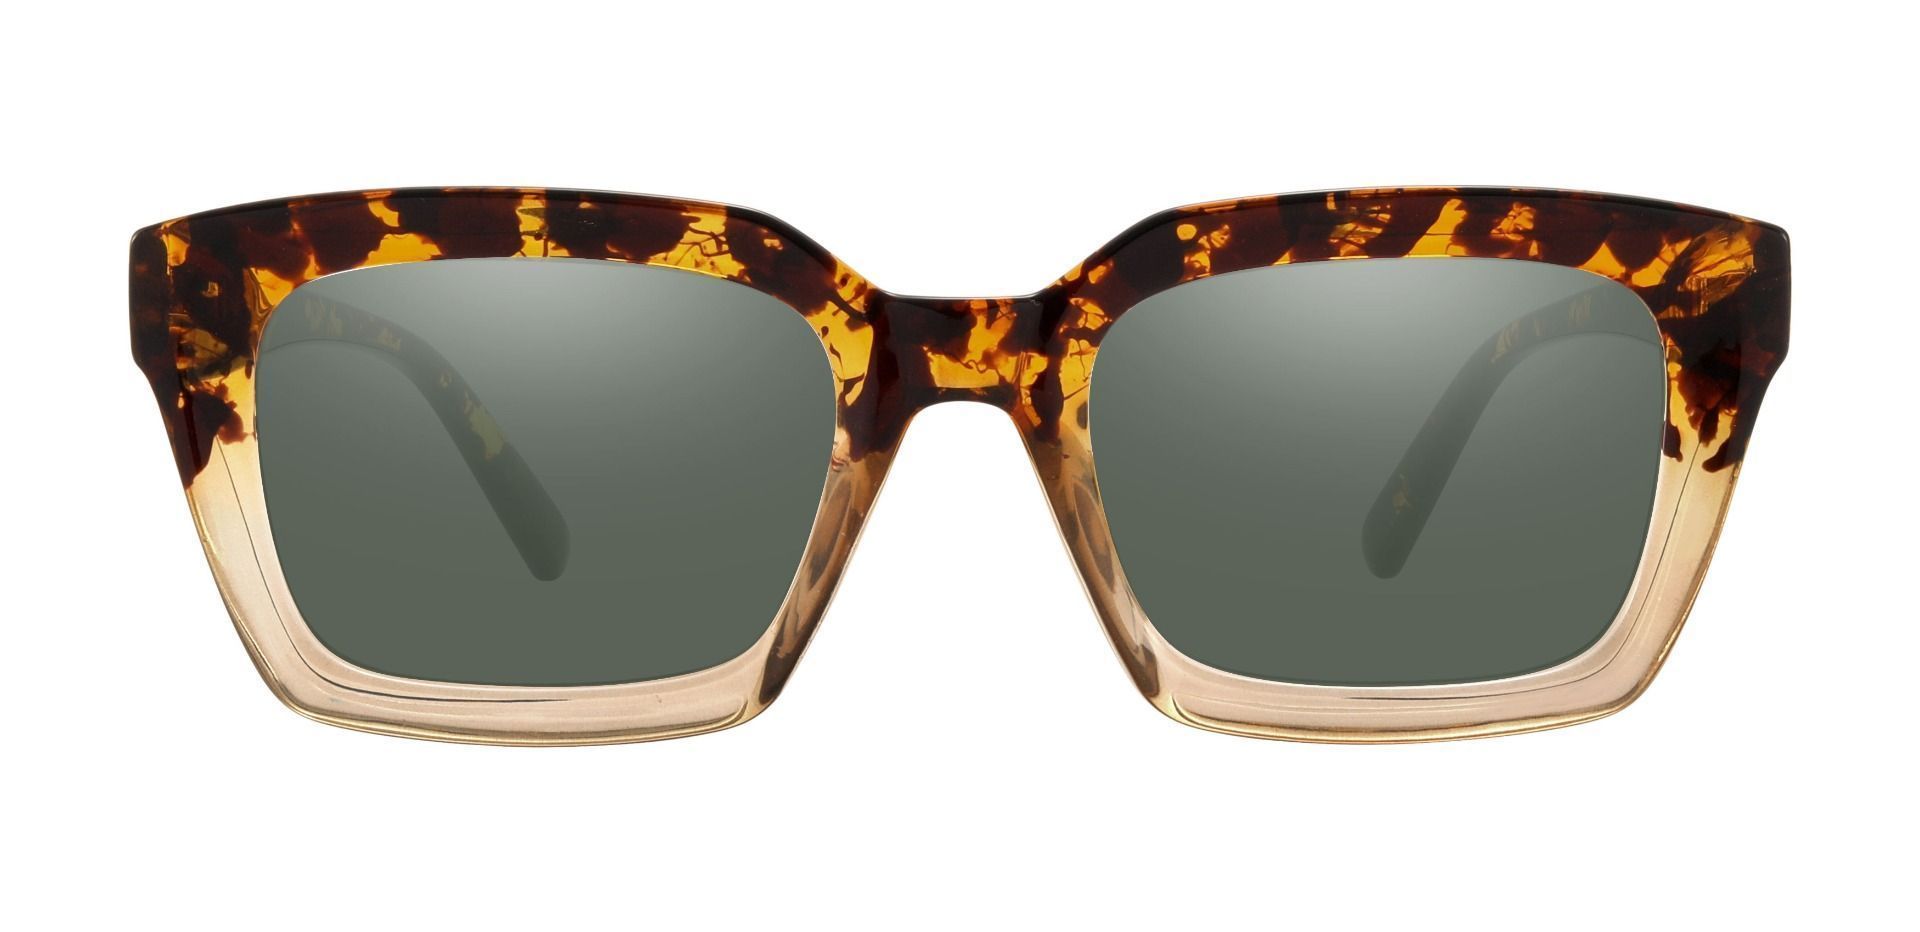 Unity Rectangle Prescription Sunglasses - Tortoise Frame With Green Lenses